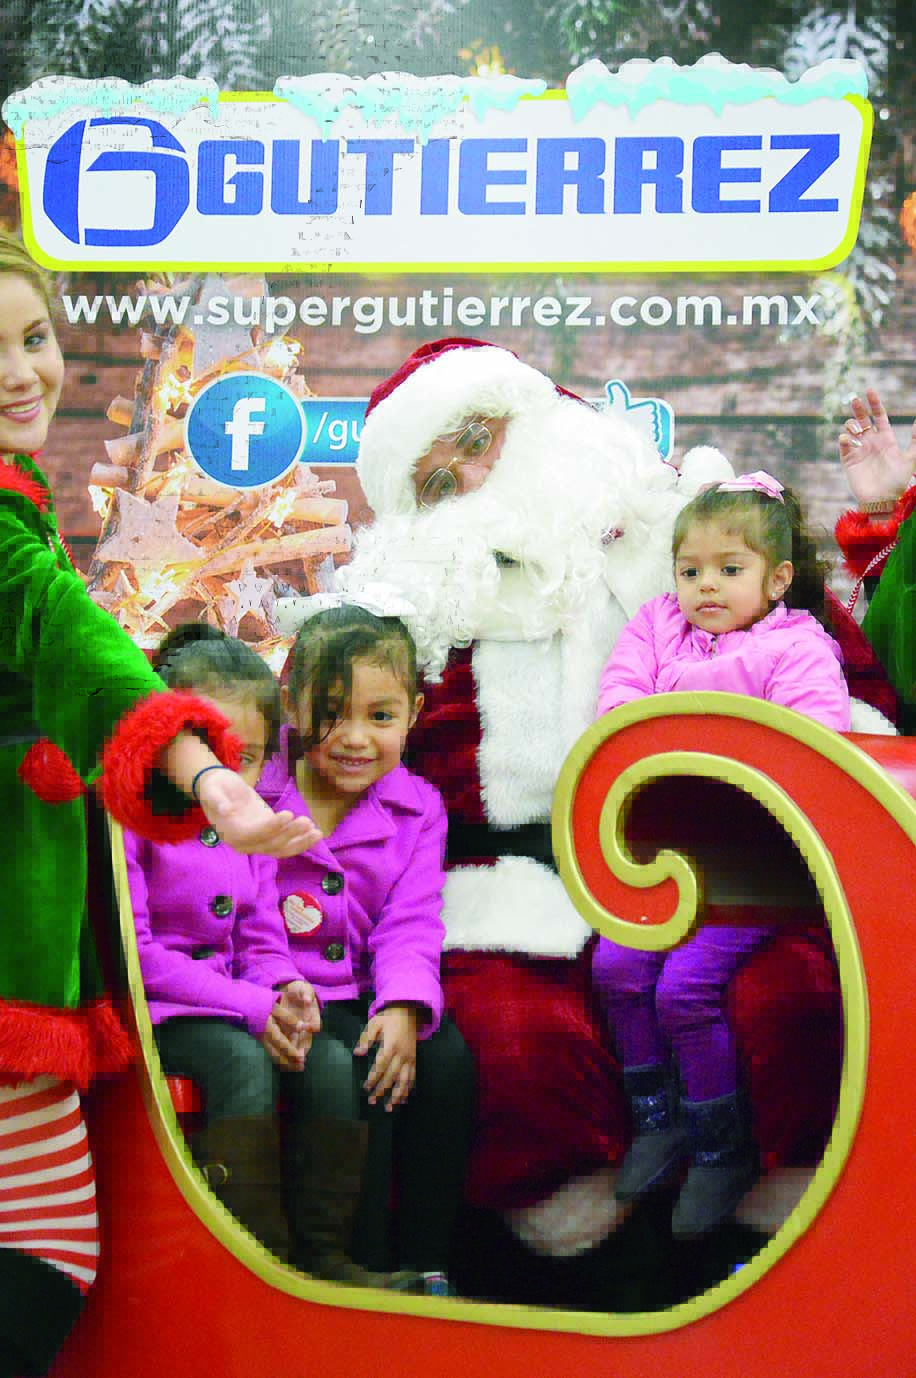 ¡Llega Santa Claus a Súper Gutiérrez!